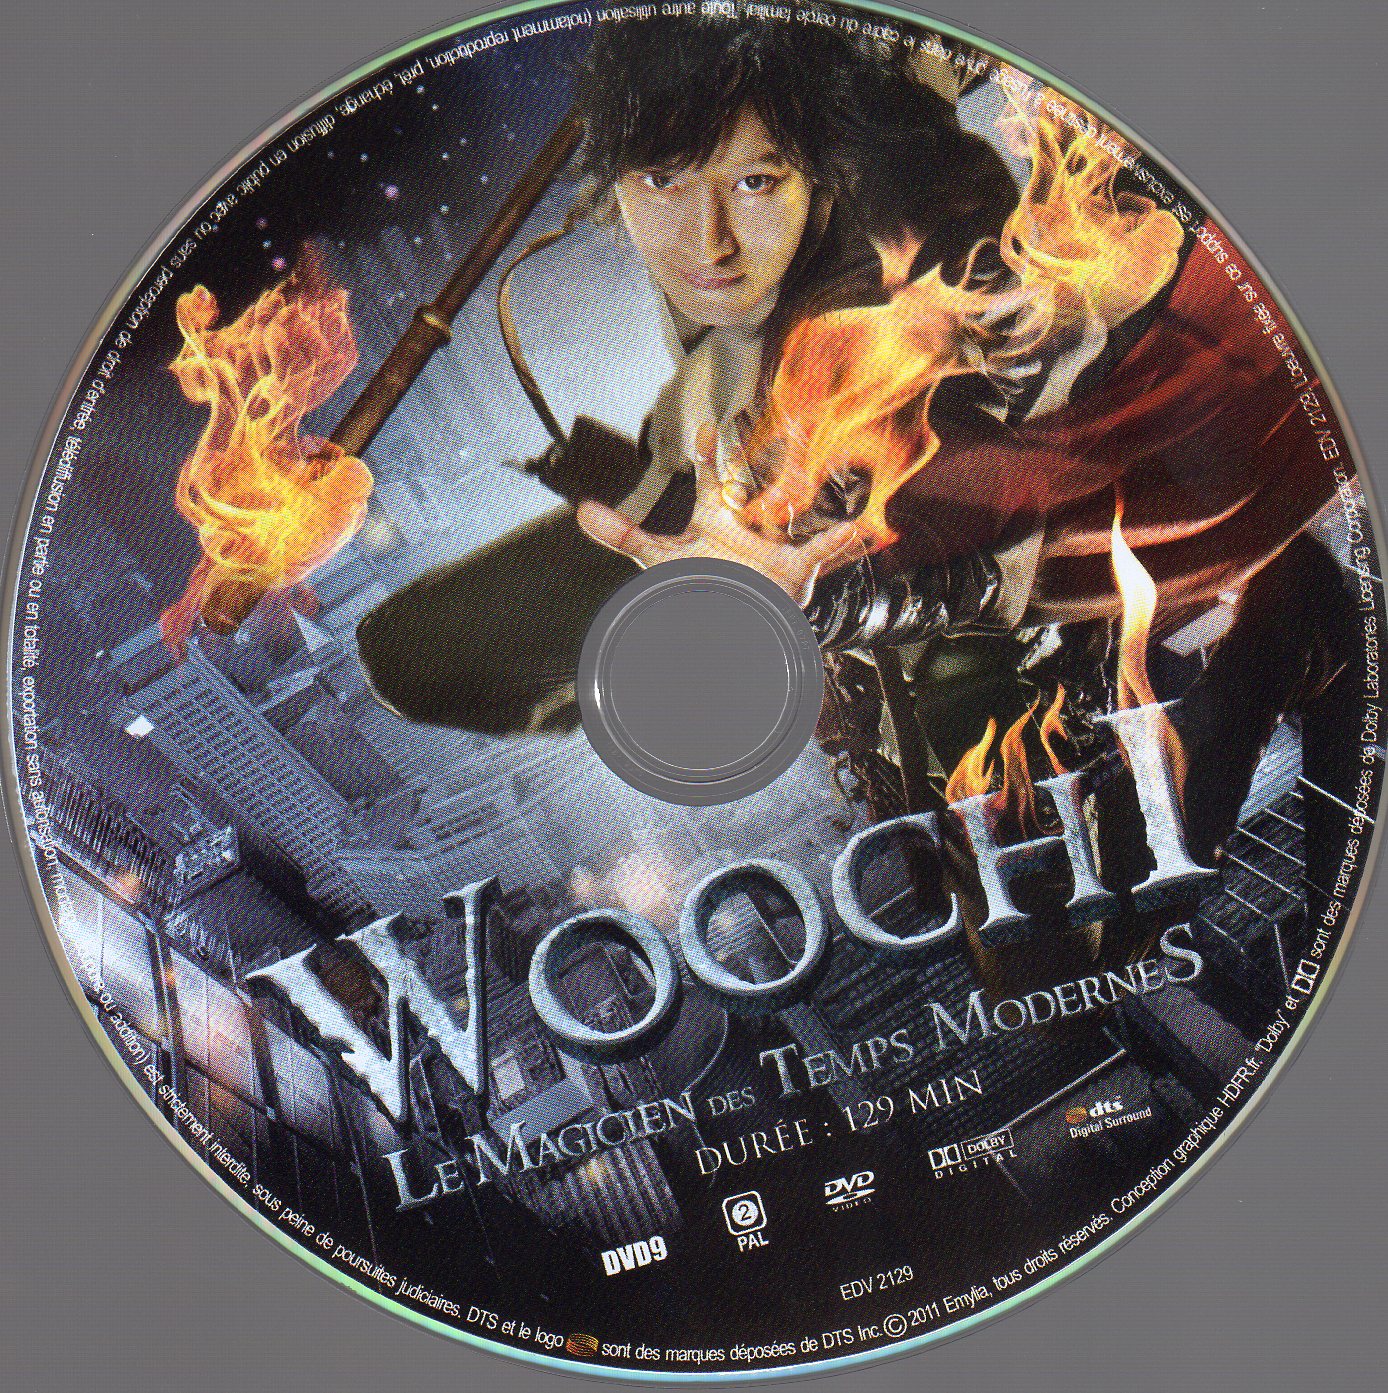 Woochi Le magicien des temps modernes